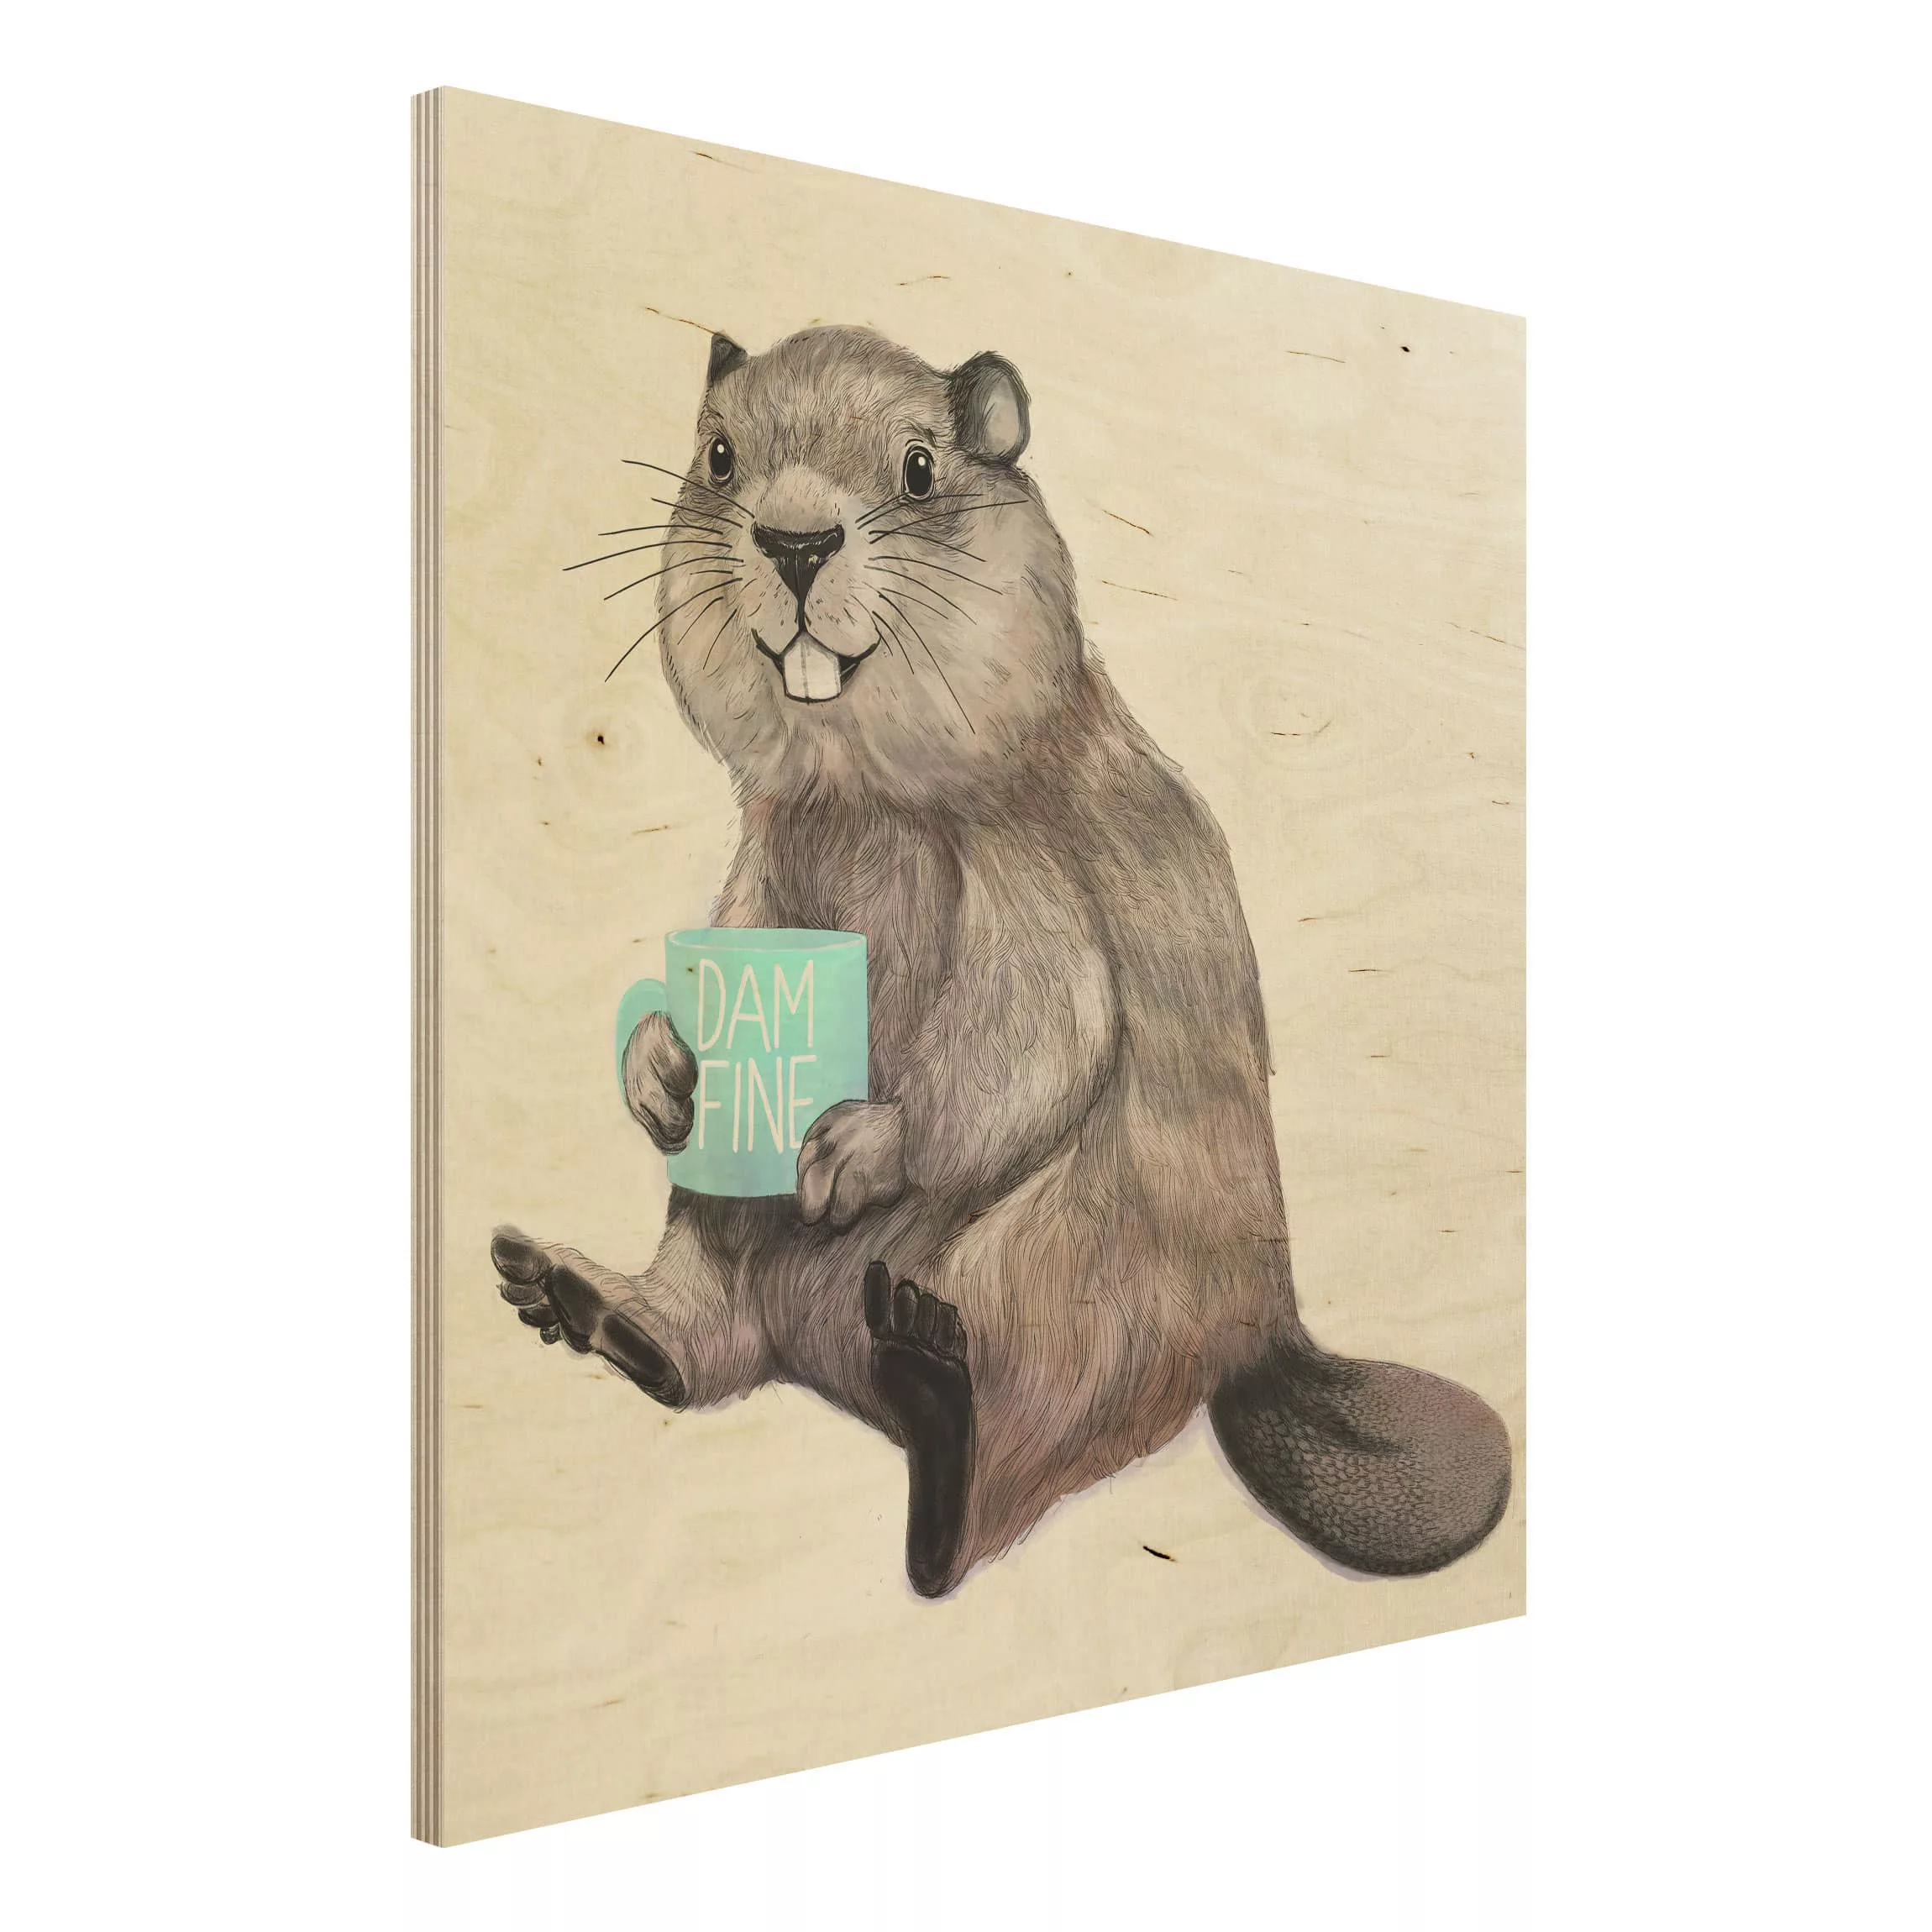 Holzbild Tiere - Quadrat Illustration Biber mit Kaffeetasse günstig online kaufen